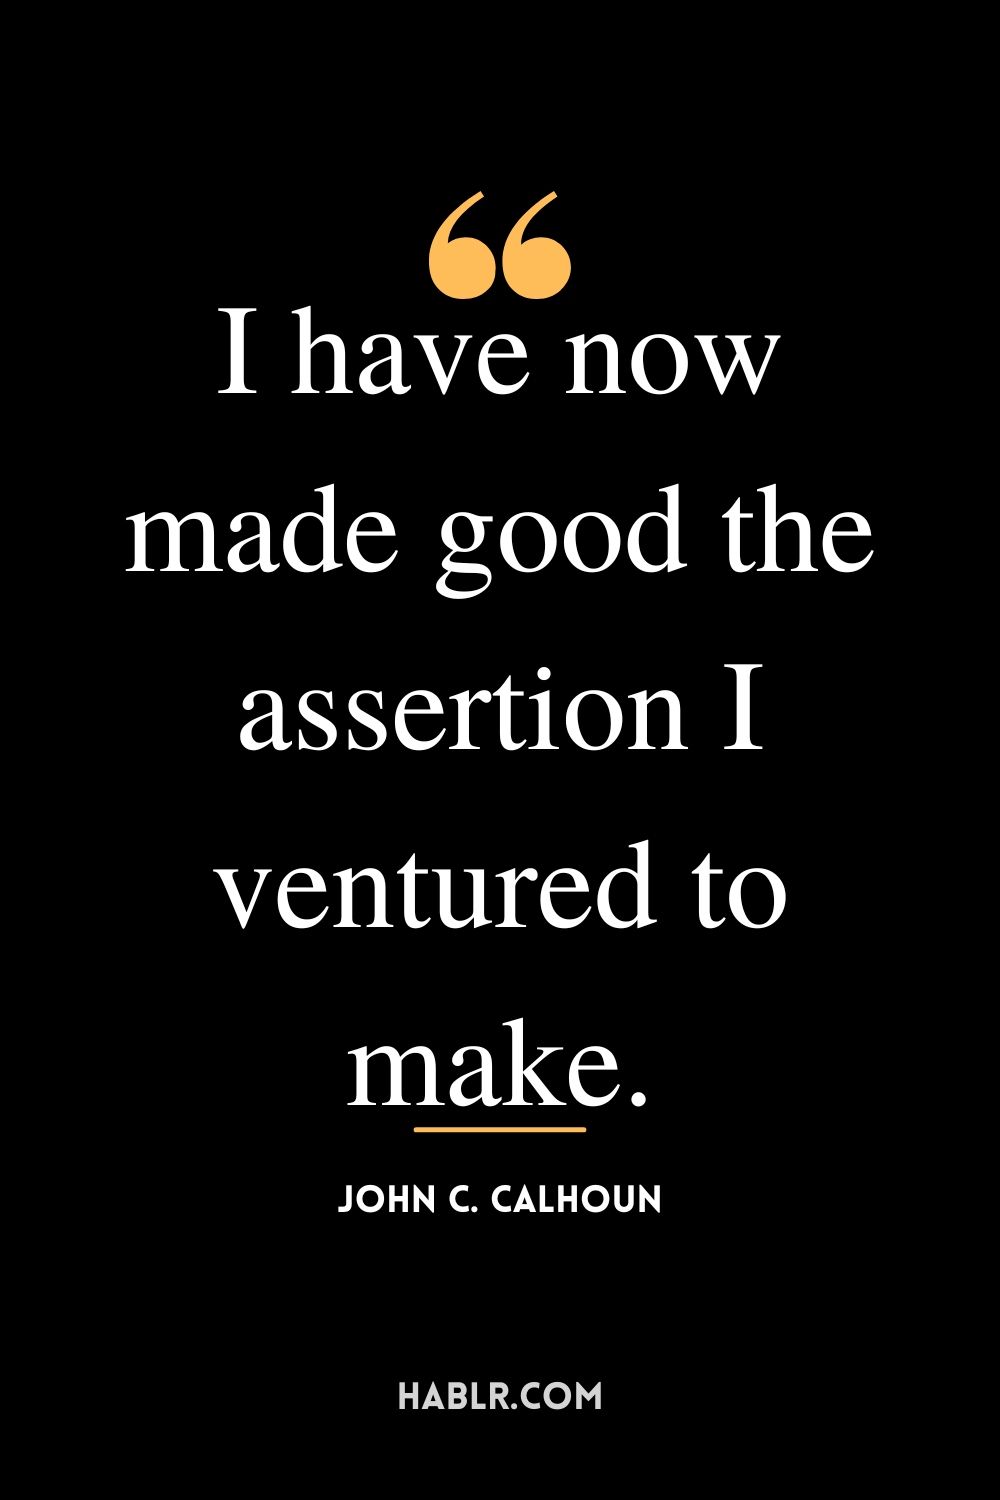 “I have now made good the assertion I ventured to make.” -John C. Calhoun